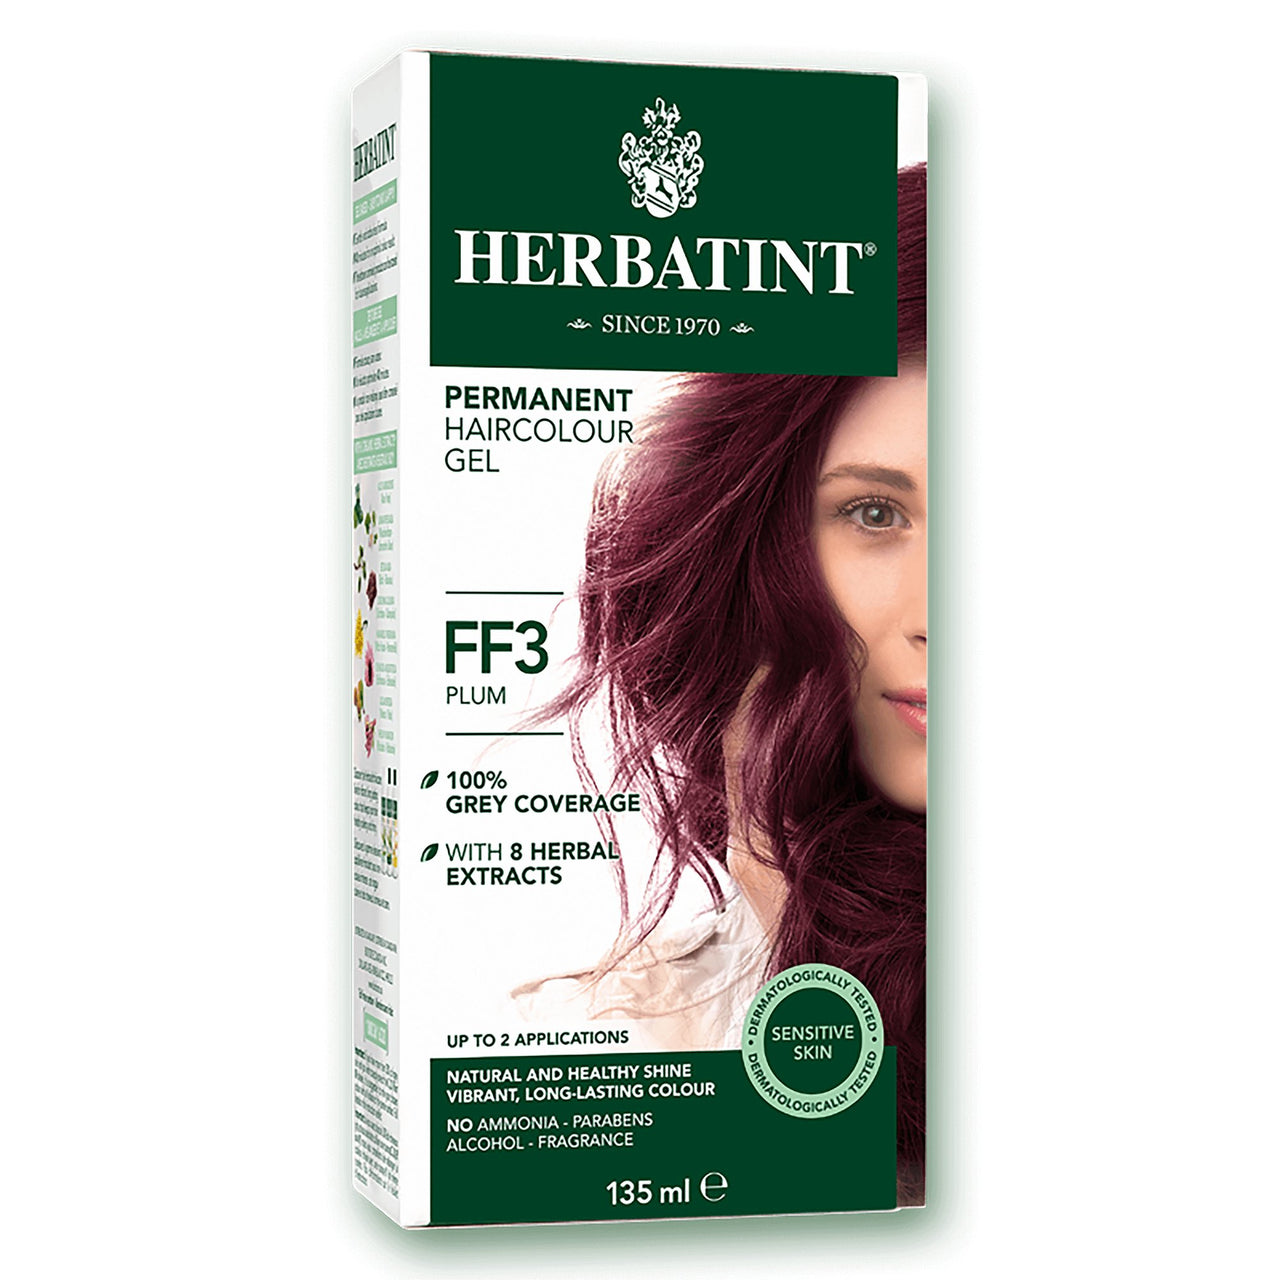 Herbatint FF3 Plum Permanent Haircolour Gel 135mL - Nutrition Plus